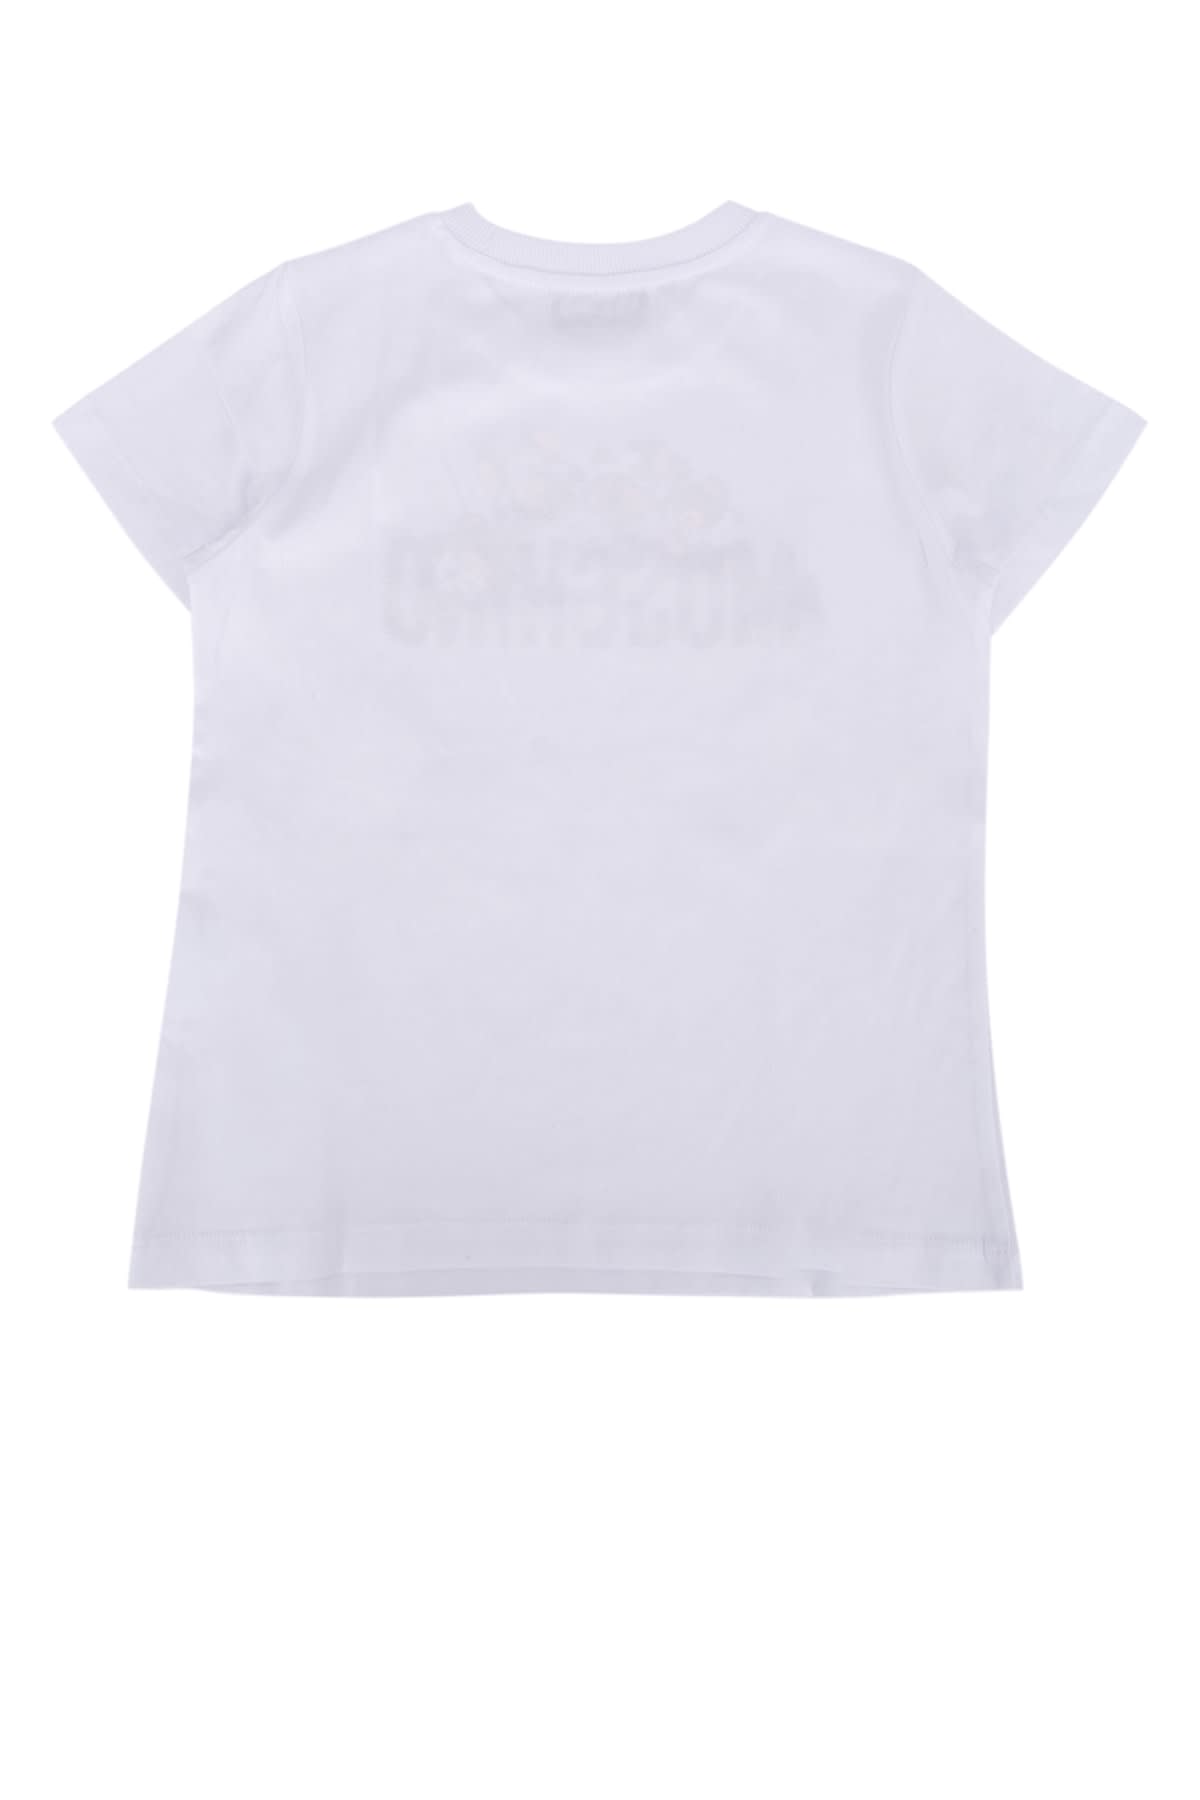 Moschino Kids' T-shirt In Biancoottico